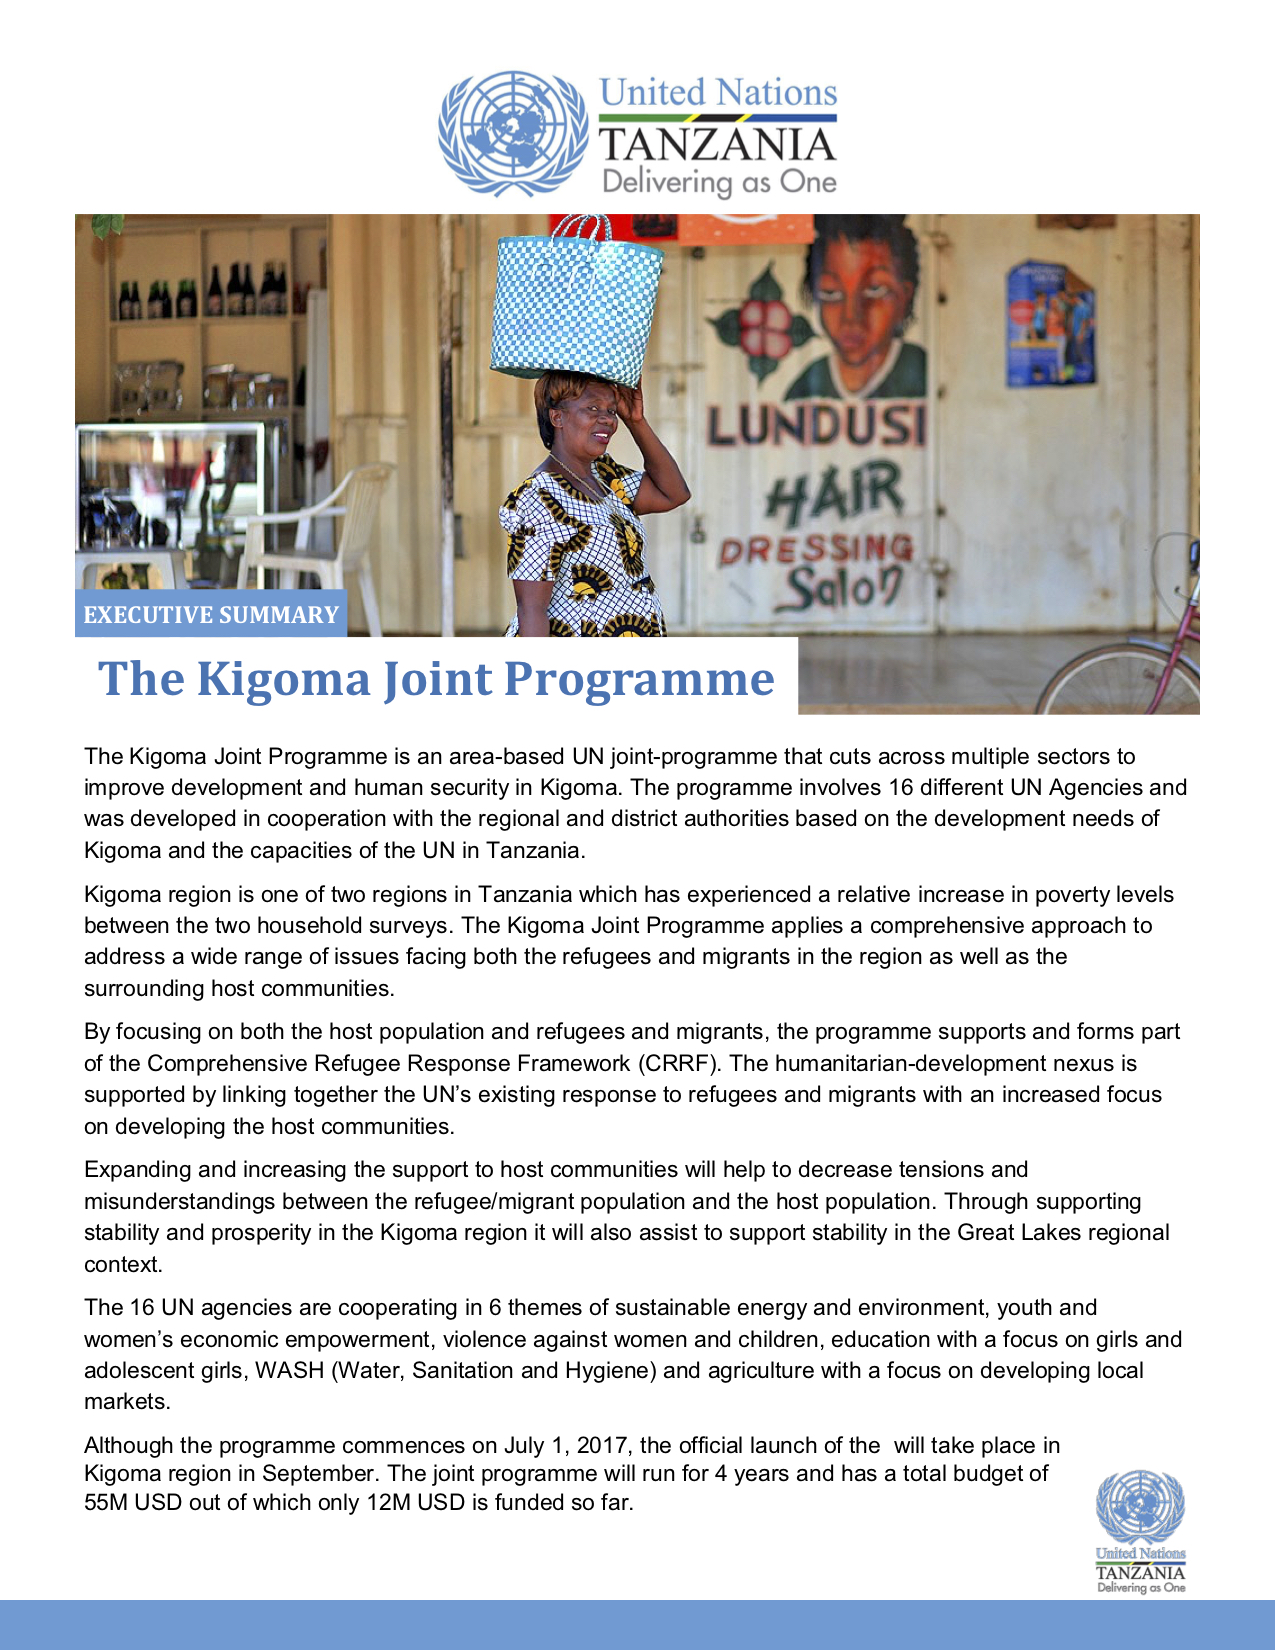 UN Kigoma Joint Programme